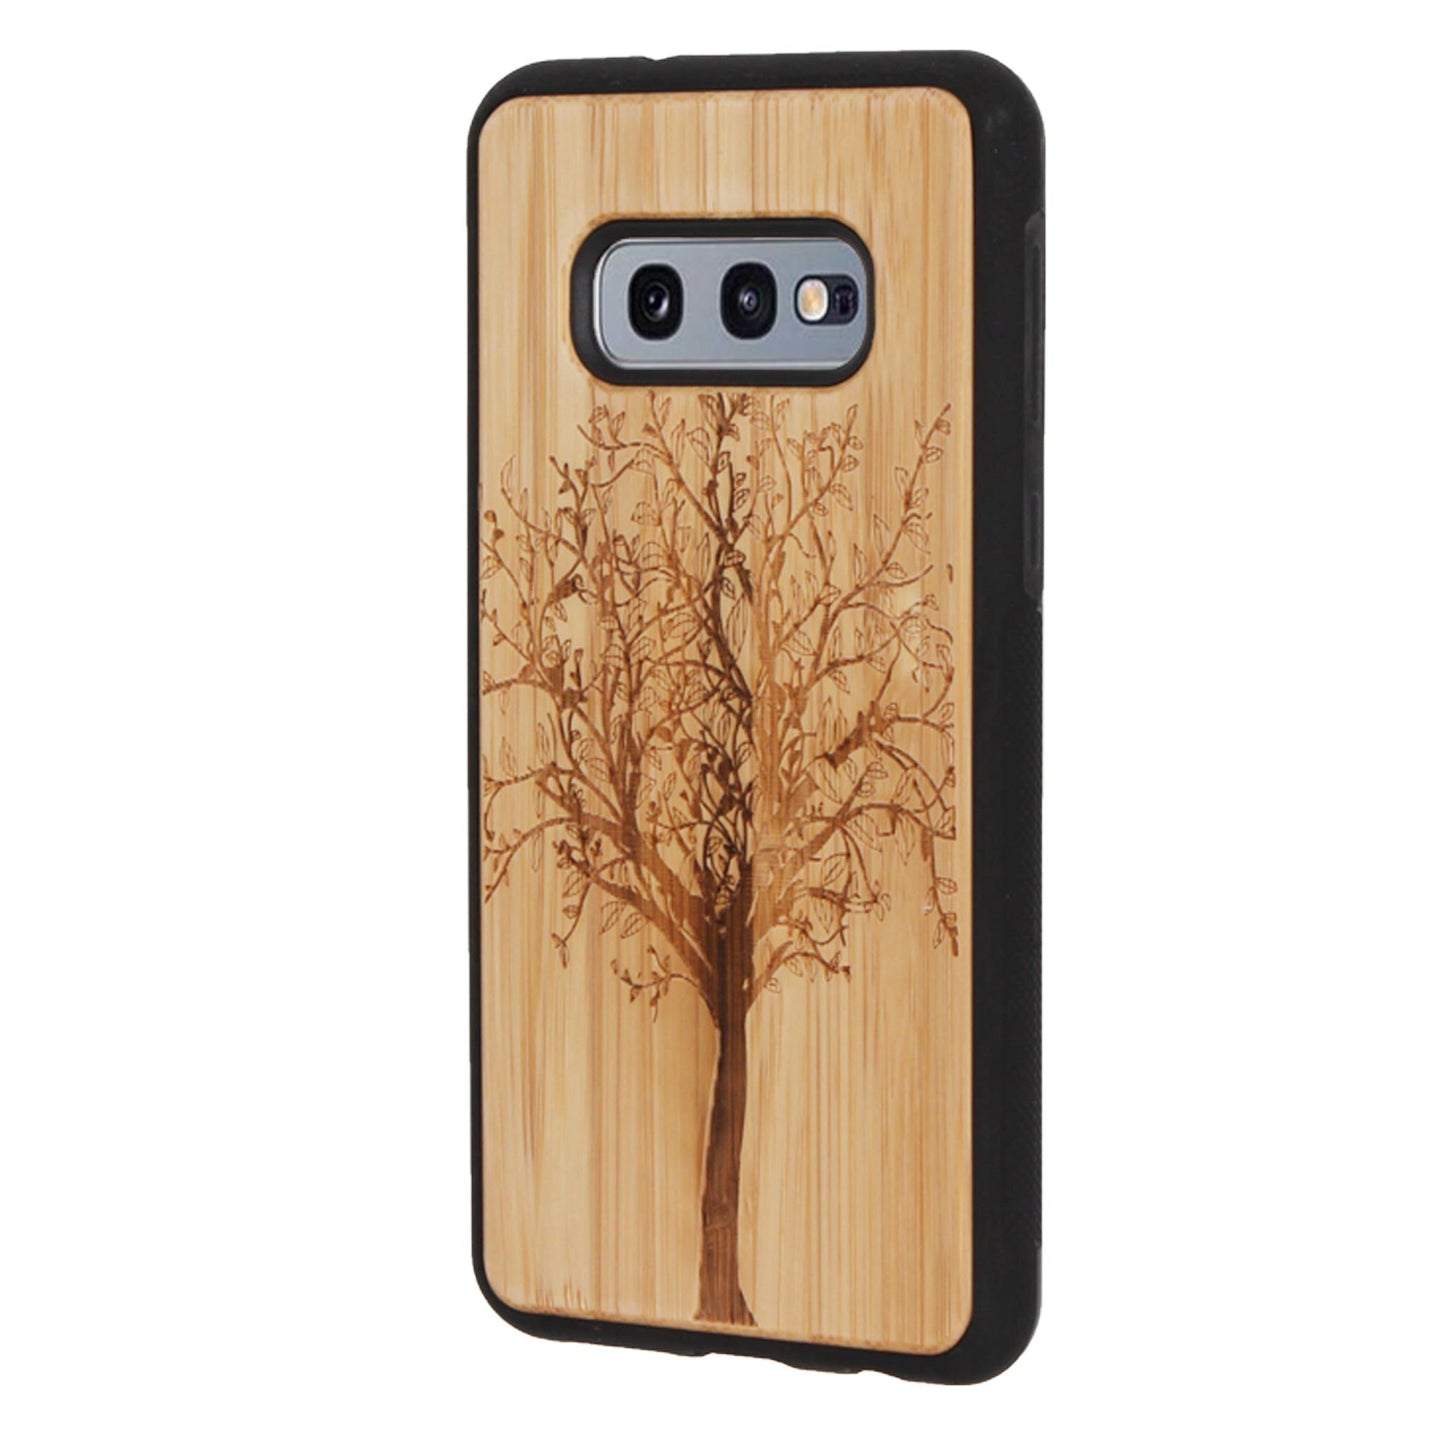 Tree of Life Eden Case made of bamboo for Samsung Galaxy S10E